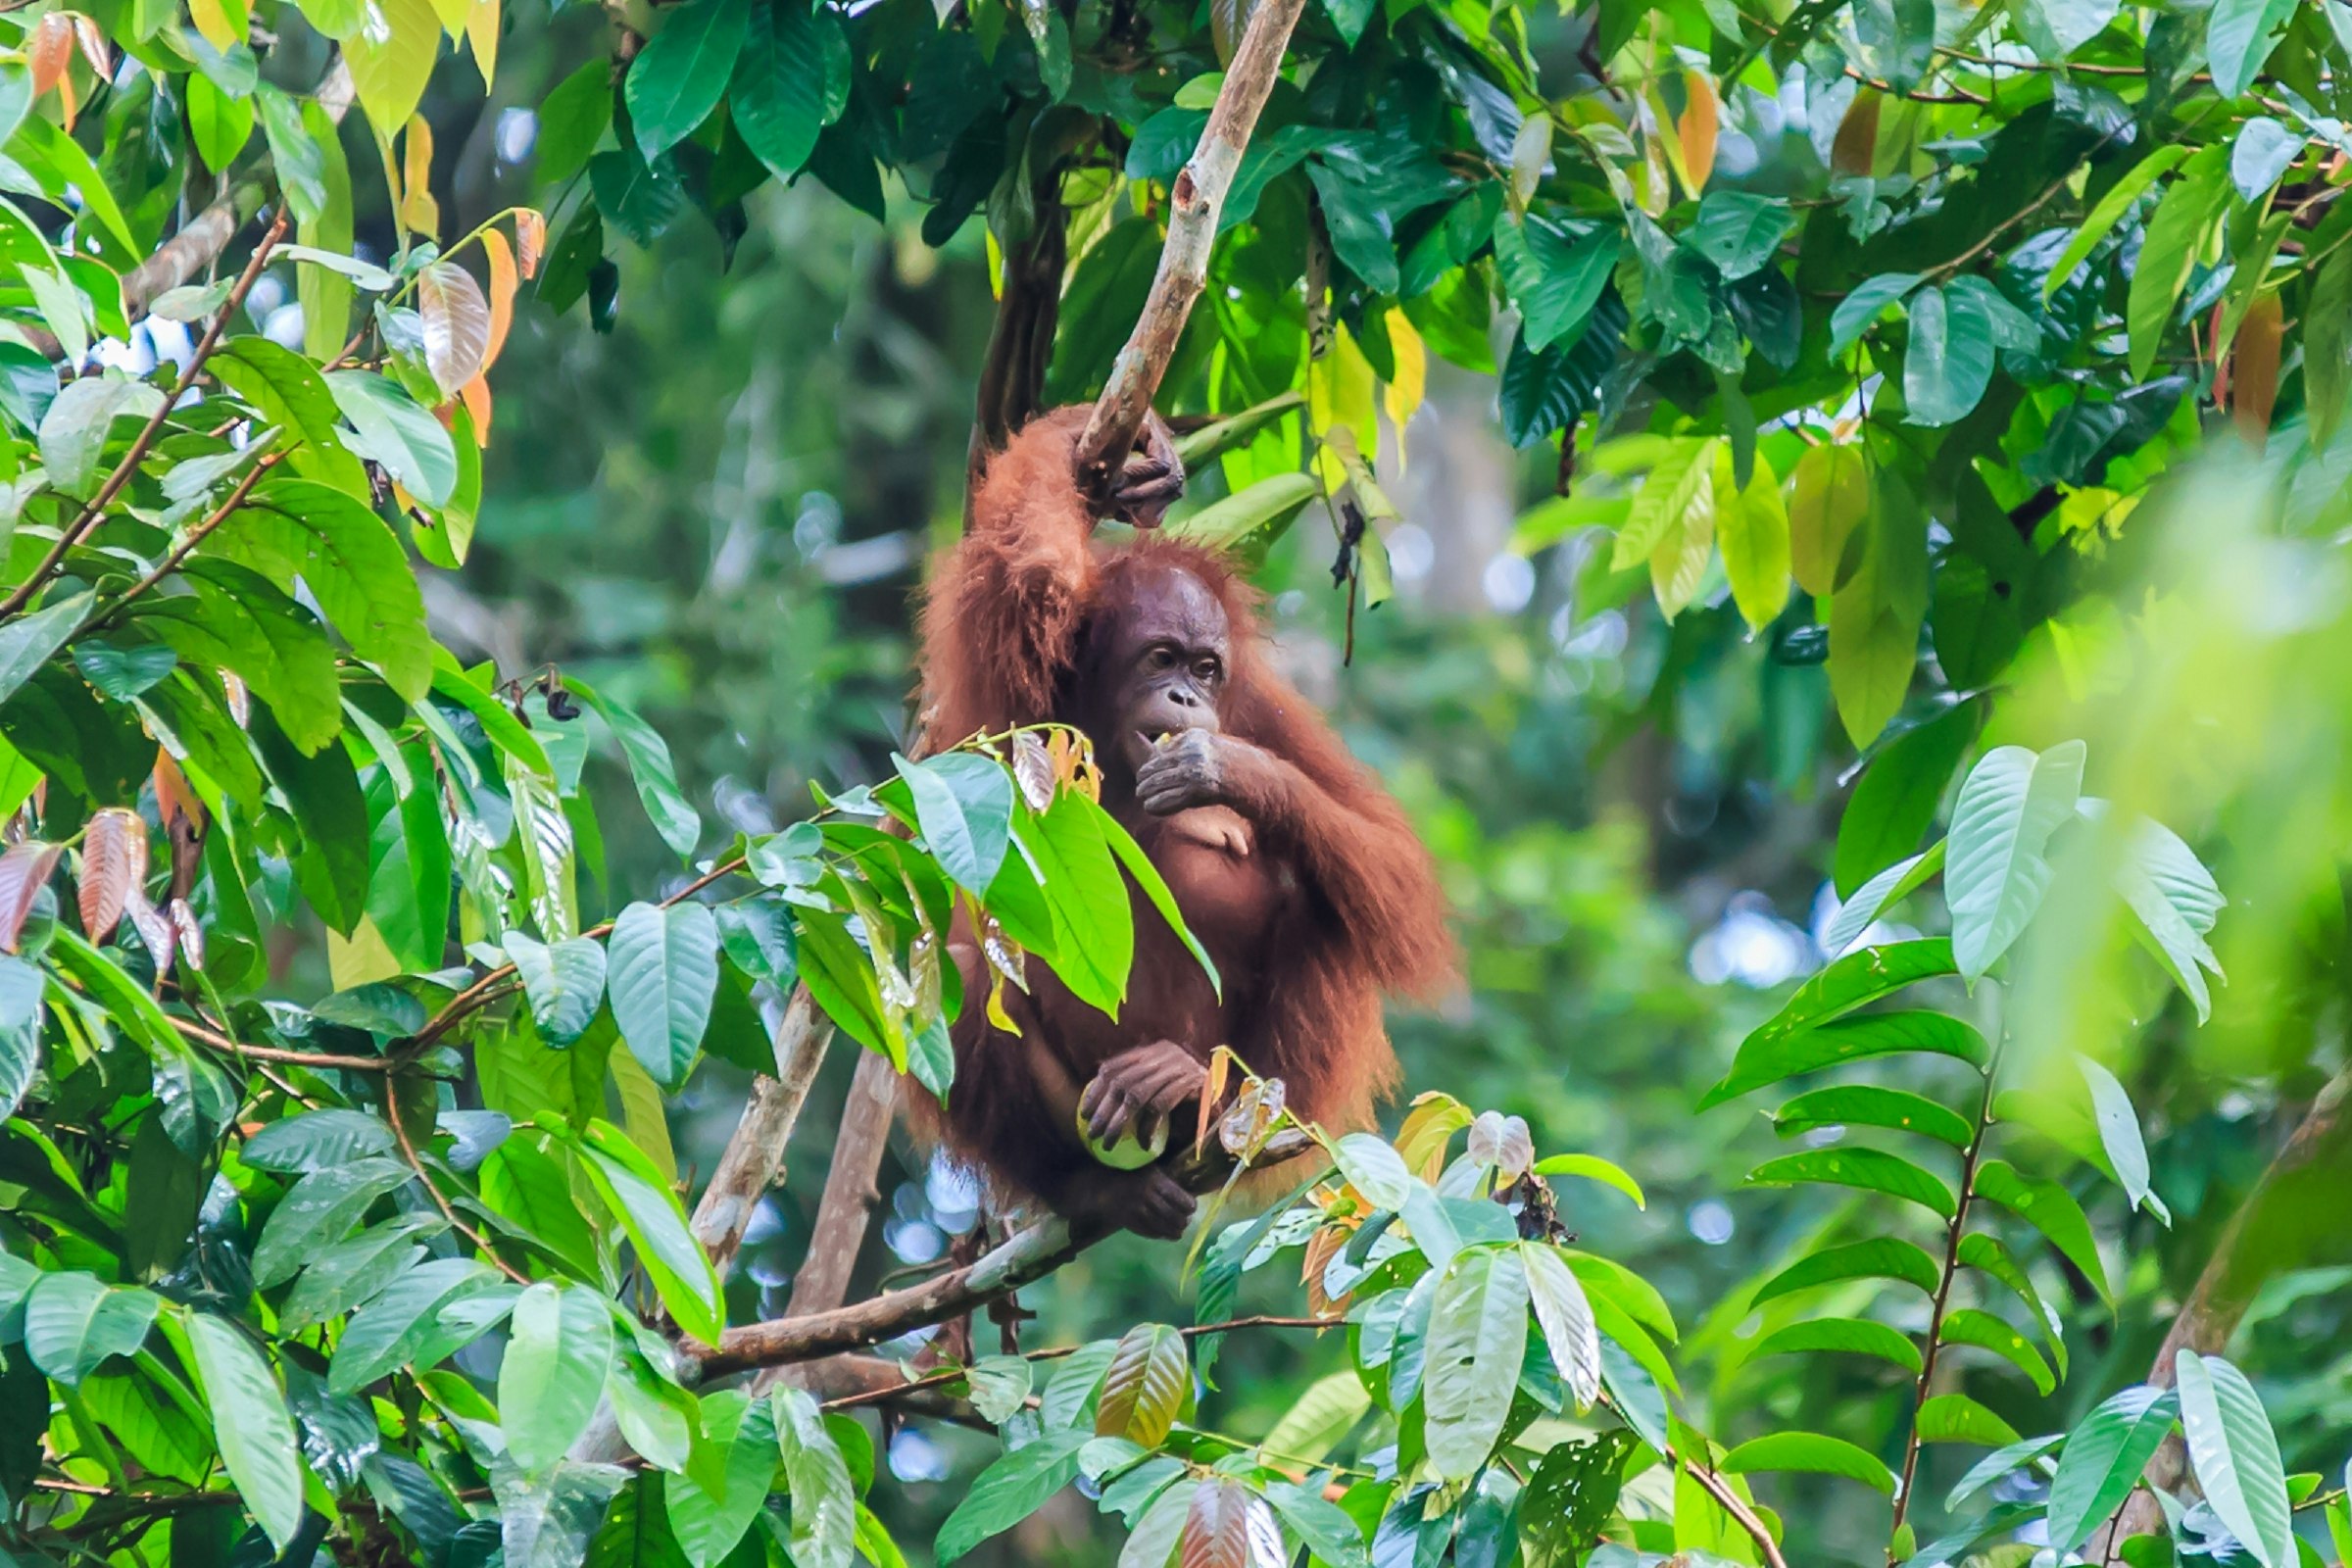 An orangutan eats while sitting in the tree tops in Borneo